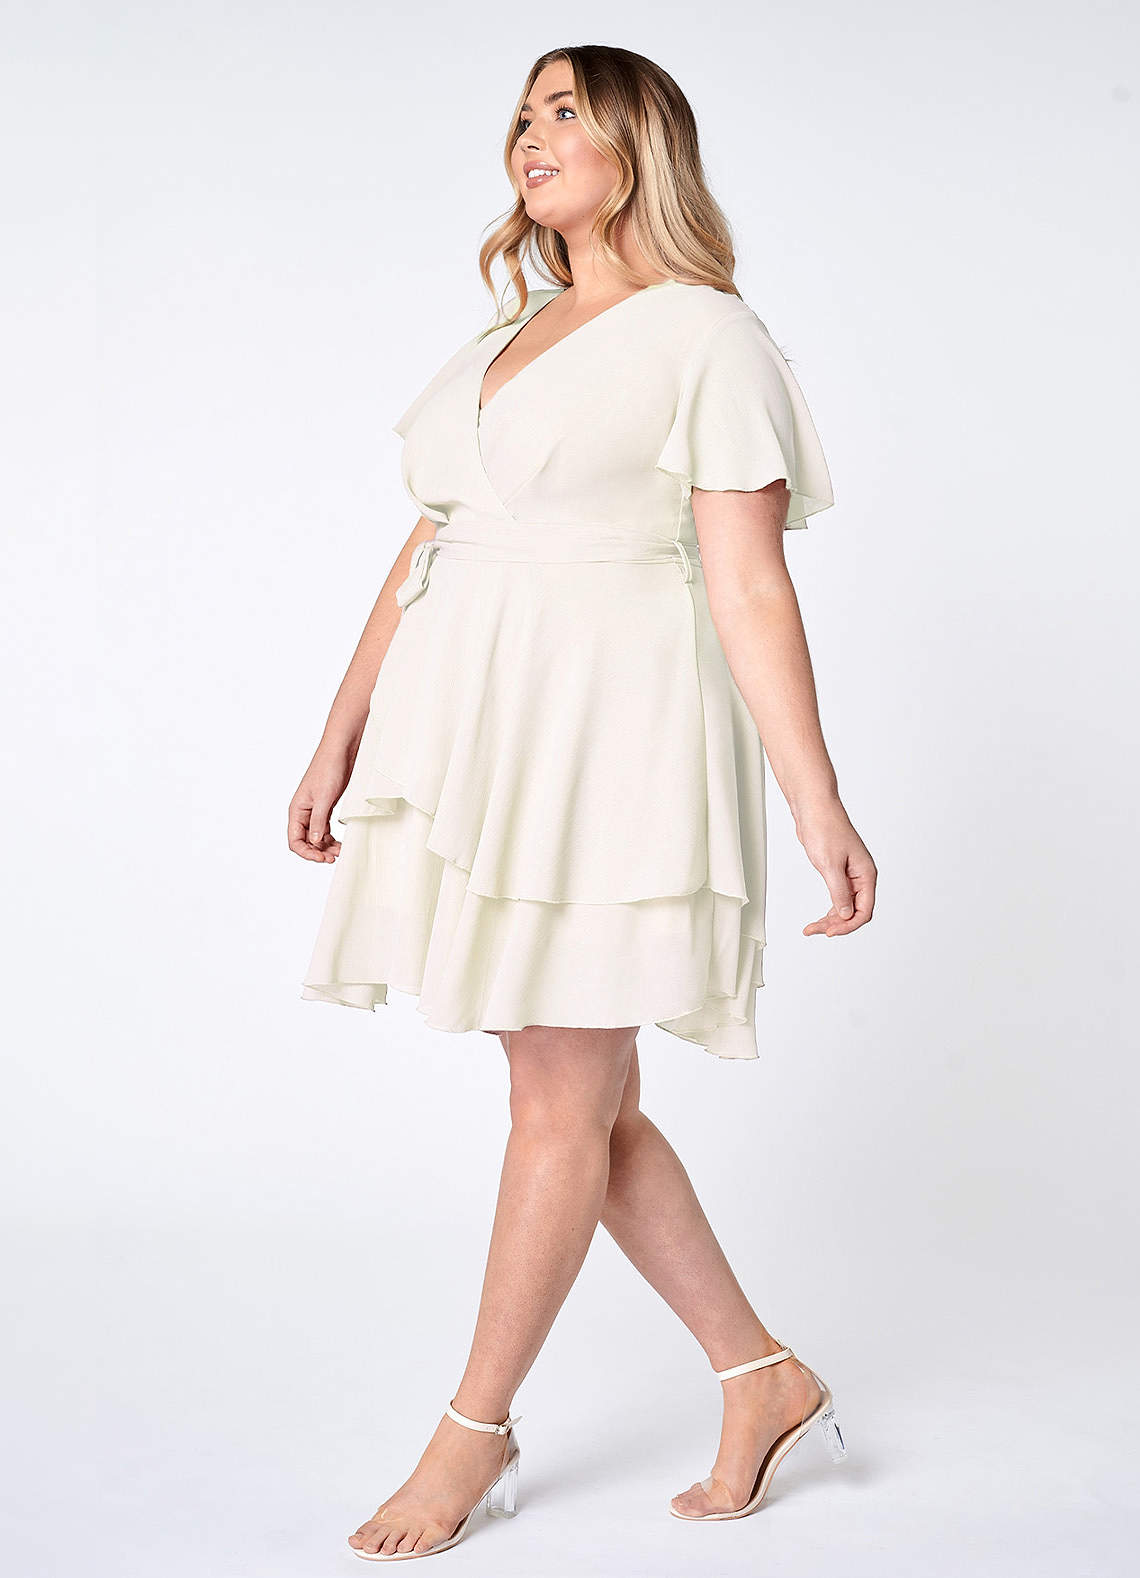 Downright Darling Ivory Ruffled Short Sleeve Mini Dress image1